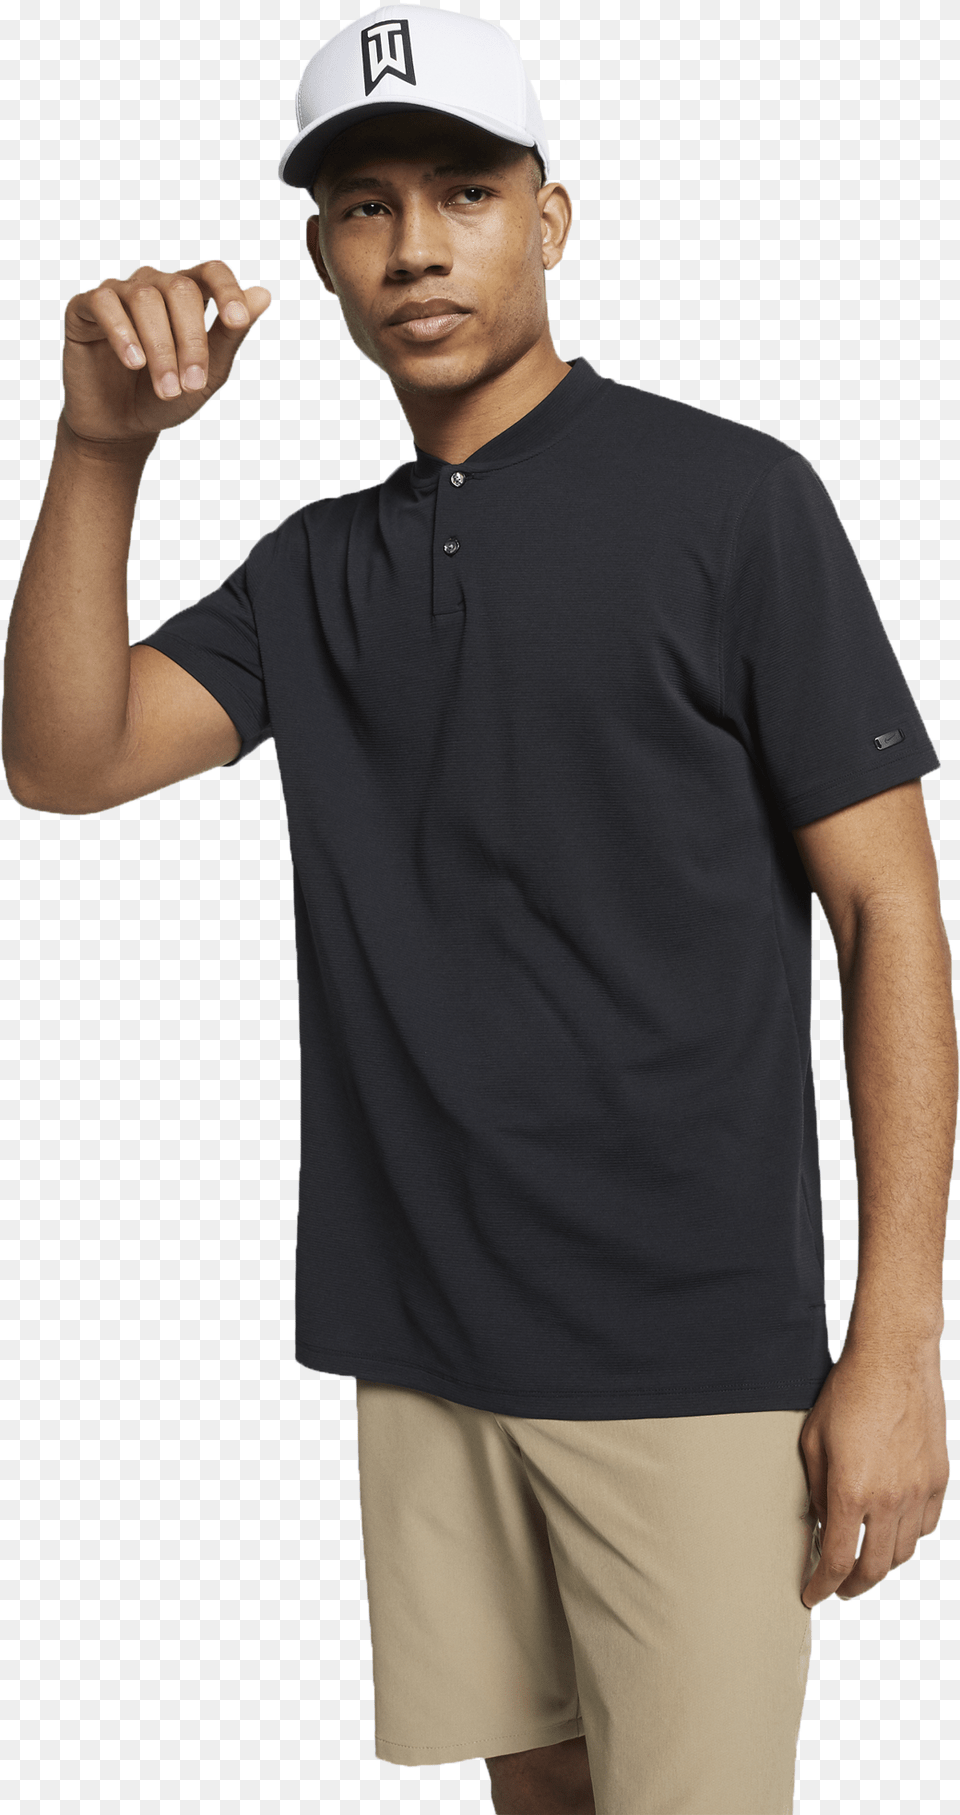 Tiger Woods Aeroreact Polo Nike, T-shirt, Baseball Cap, Cap, Clothing Png Image